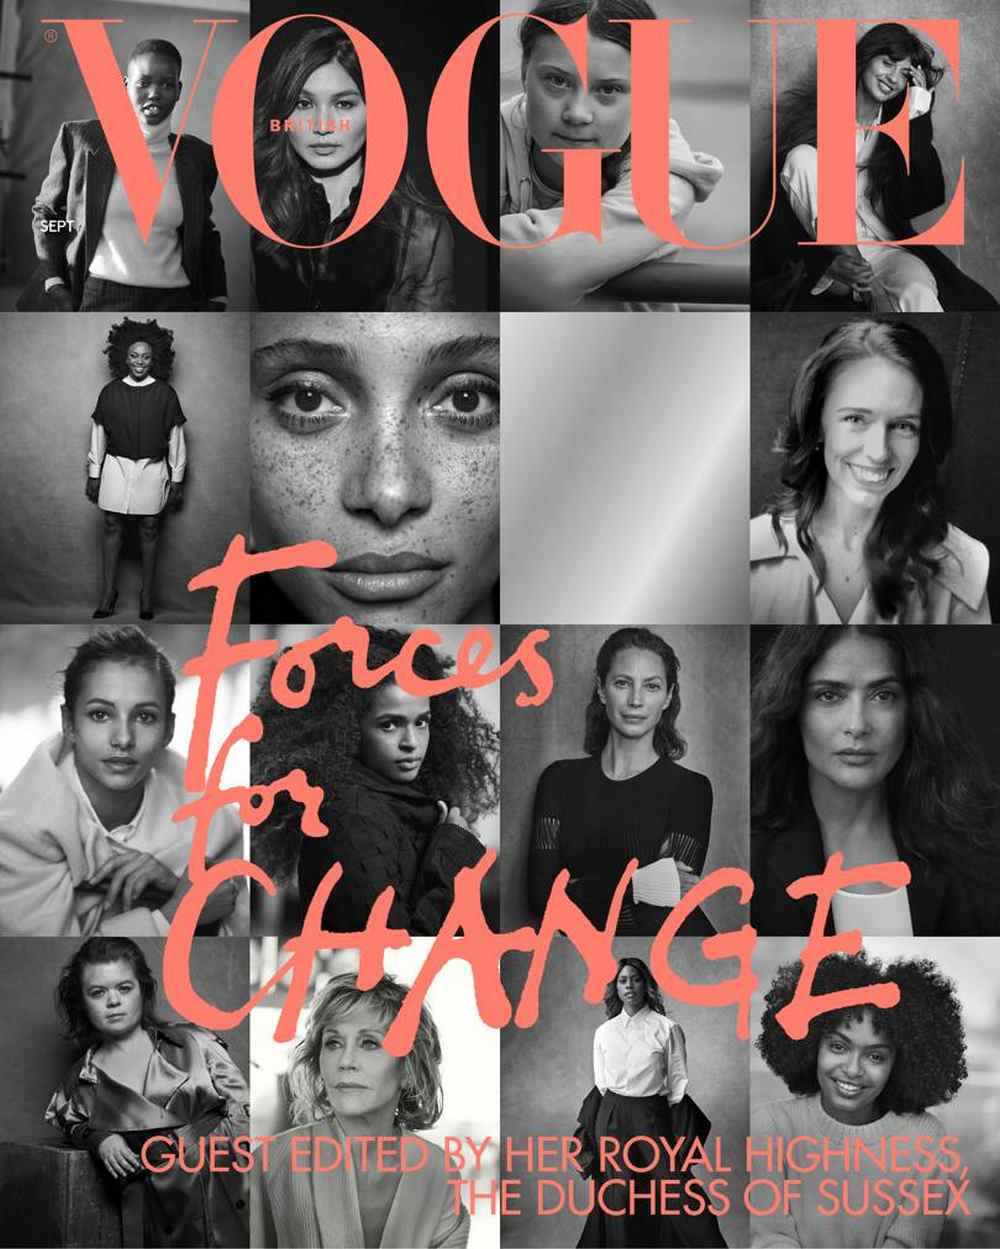 The September cover for UK Vogue. Image Credit: Vogue